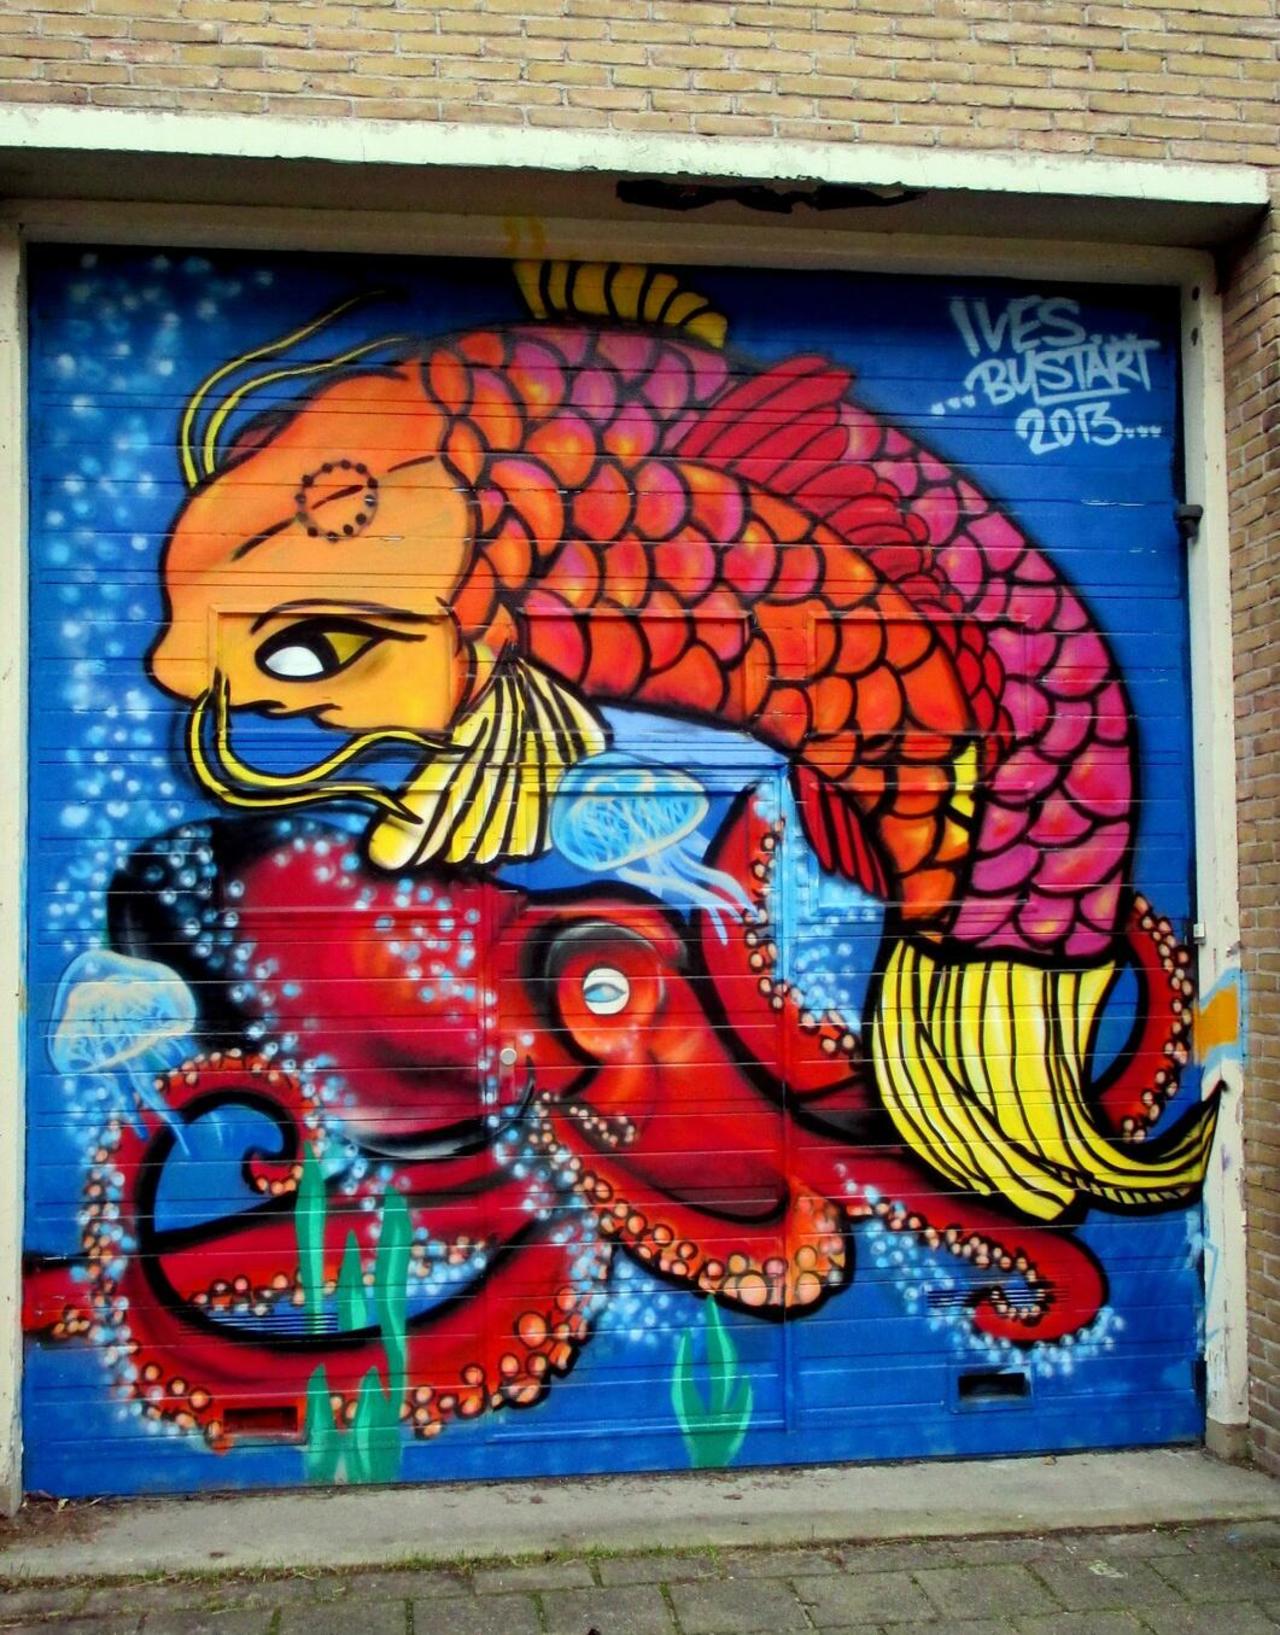 "@RRoedman: #streetart #graffiti #mural from #Bustart in #Amsterdam  fish again http://wallpaintss.blogspot.nl/ http://t.co/2kHdhKUTbH"